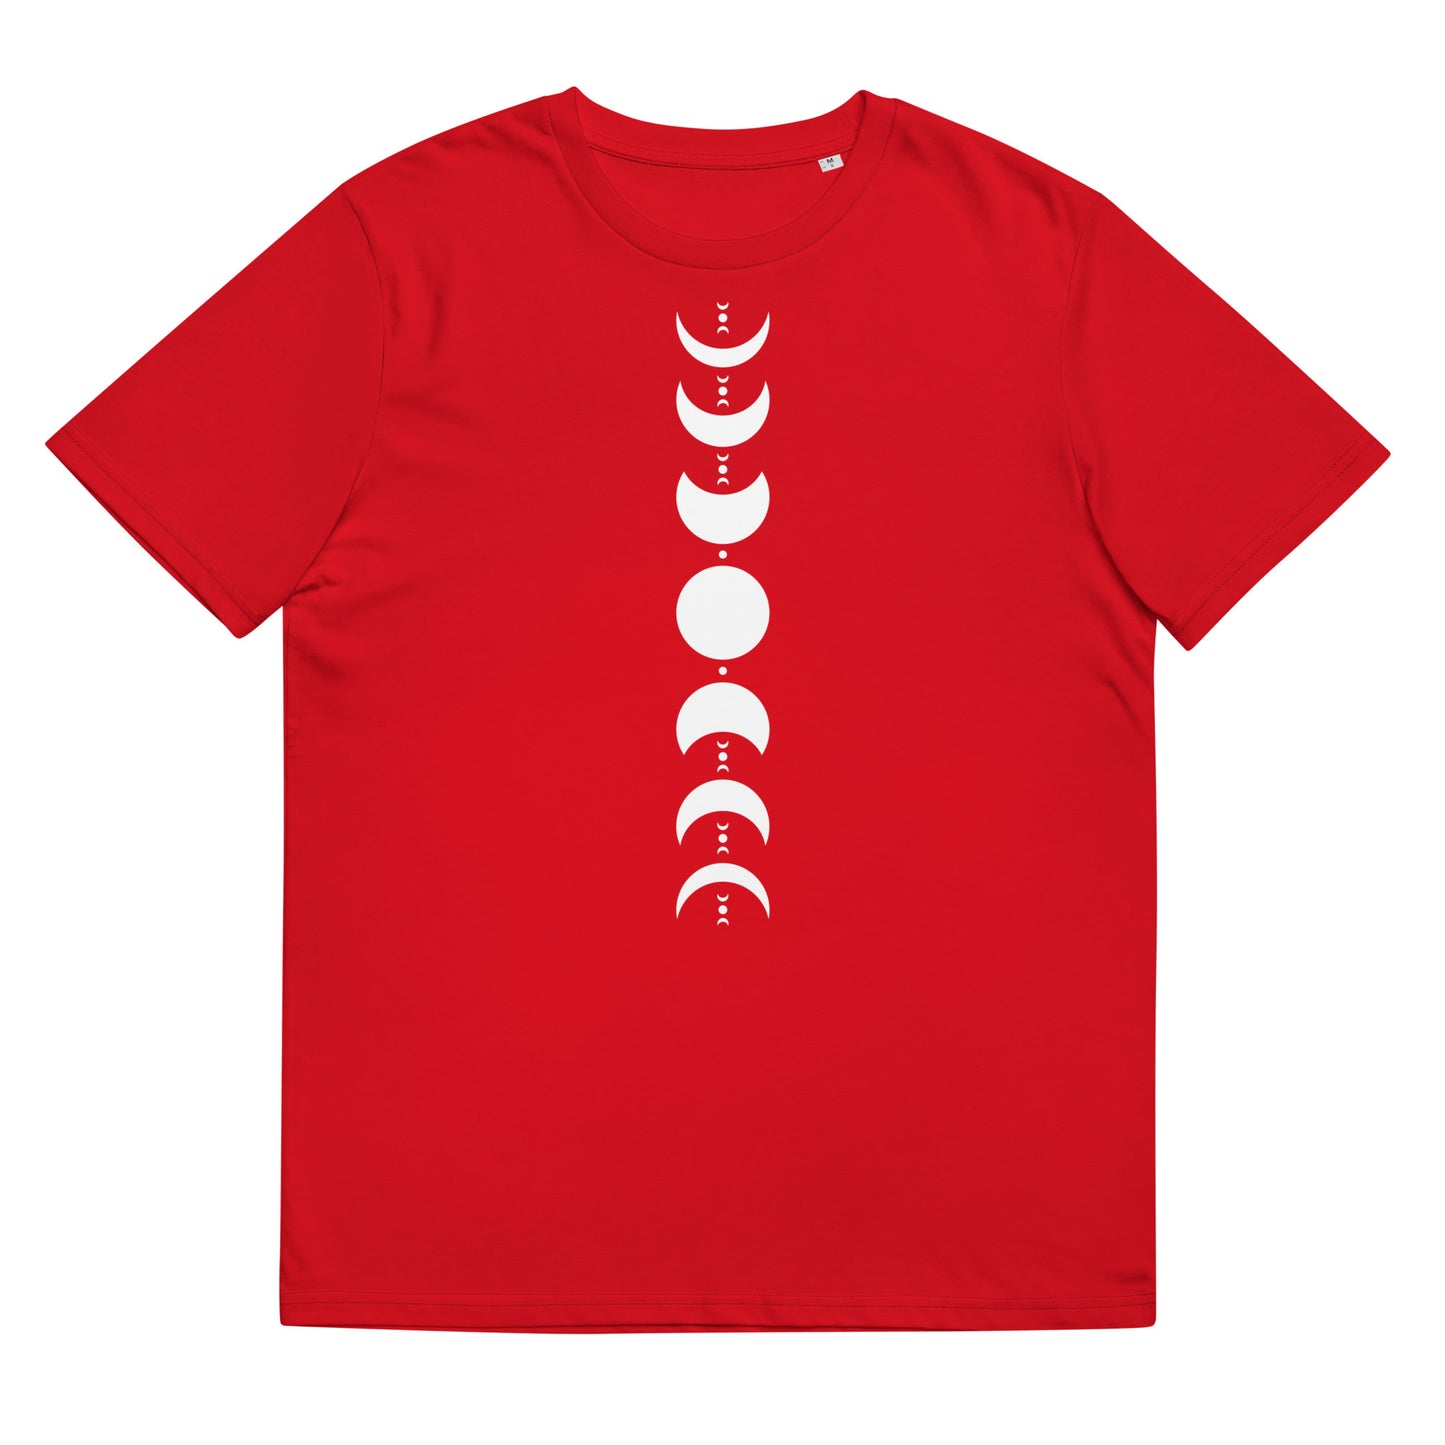 Organic cotton unisex t-shirt: Moon phases, dark color